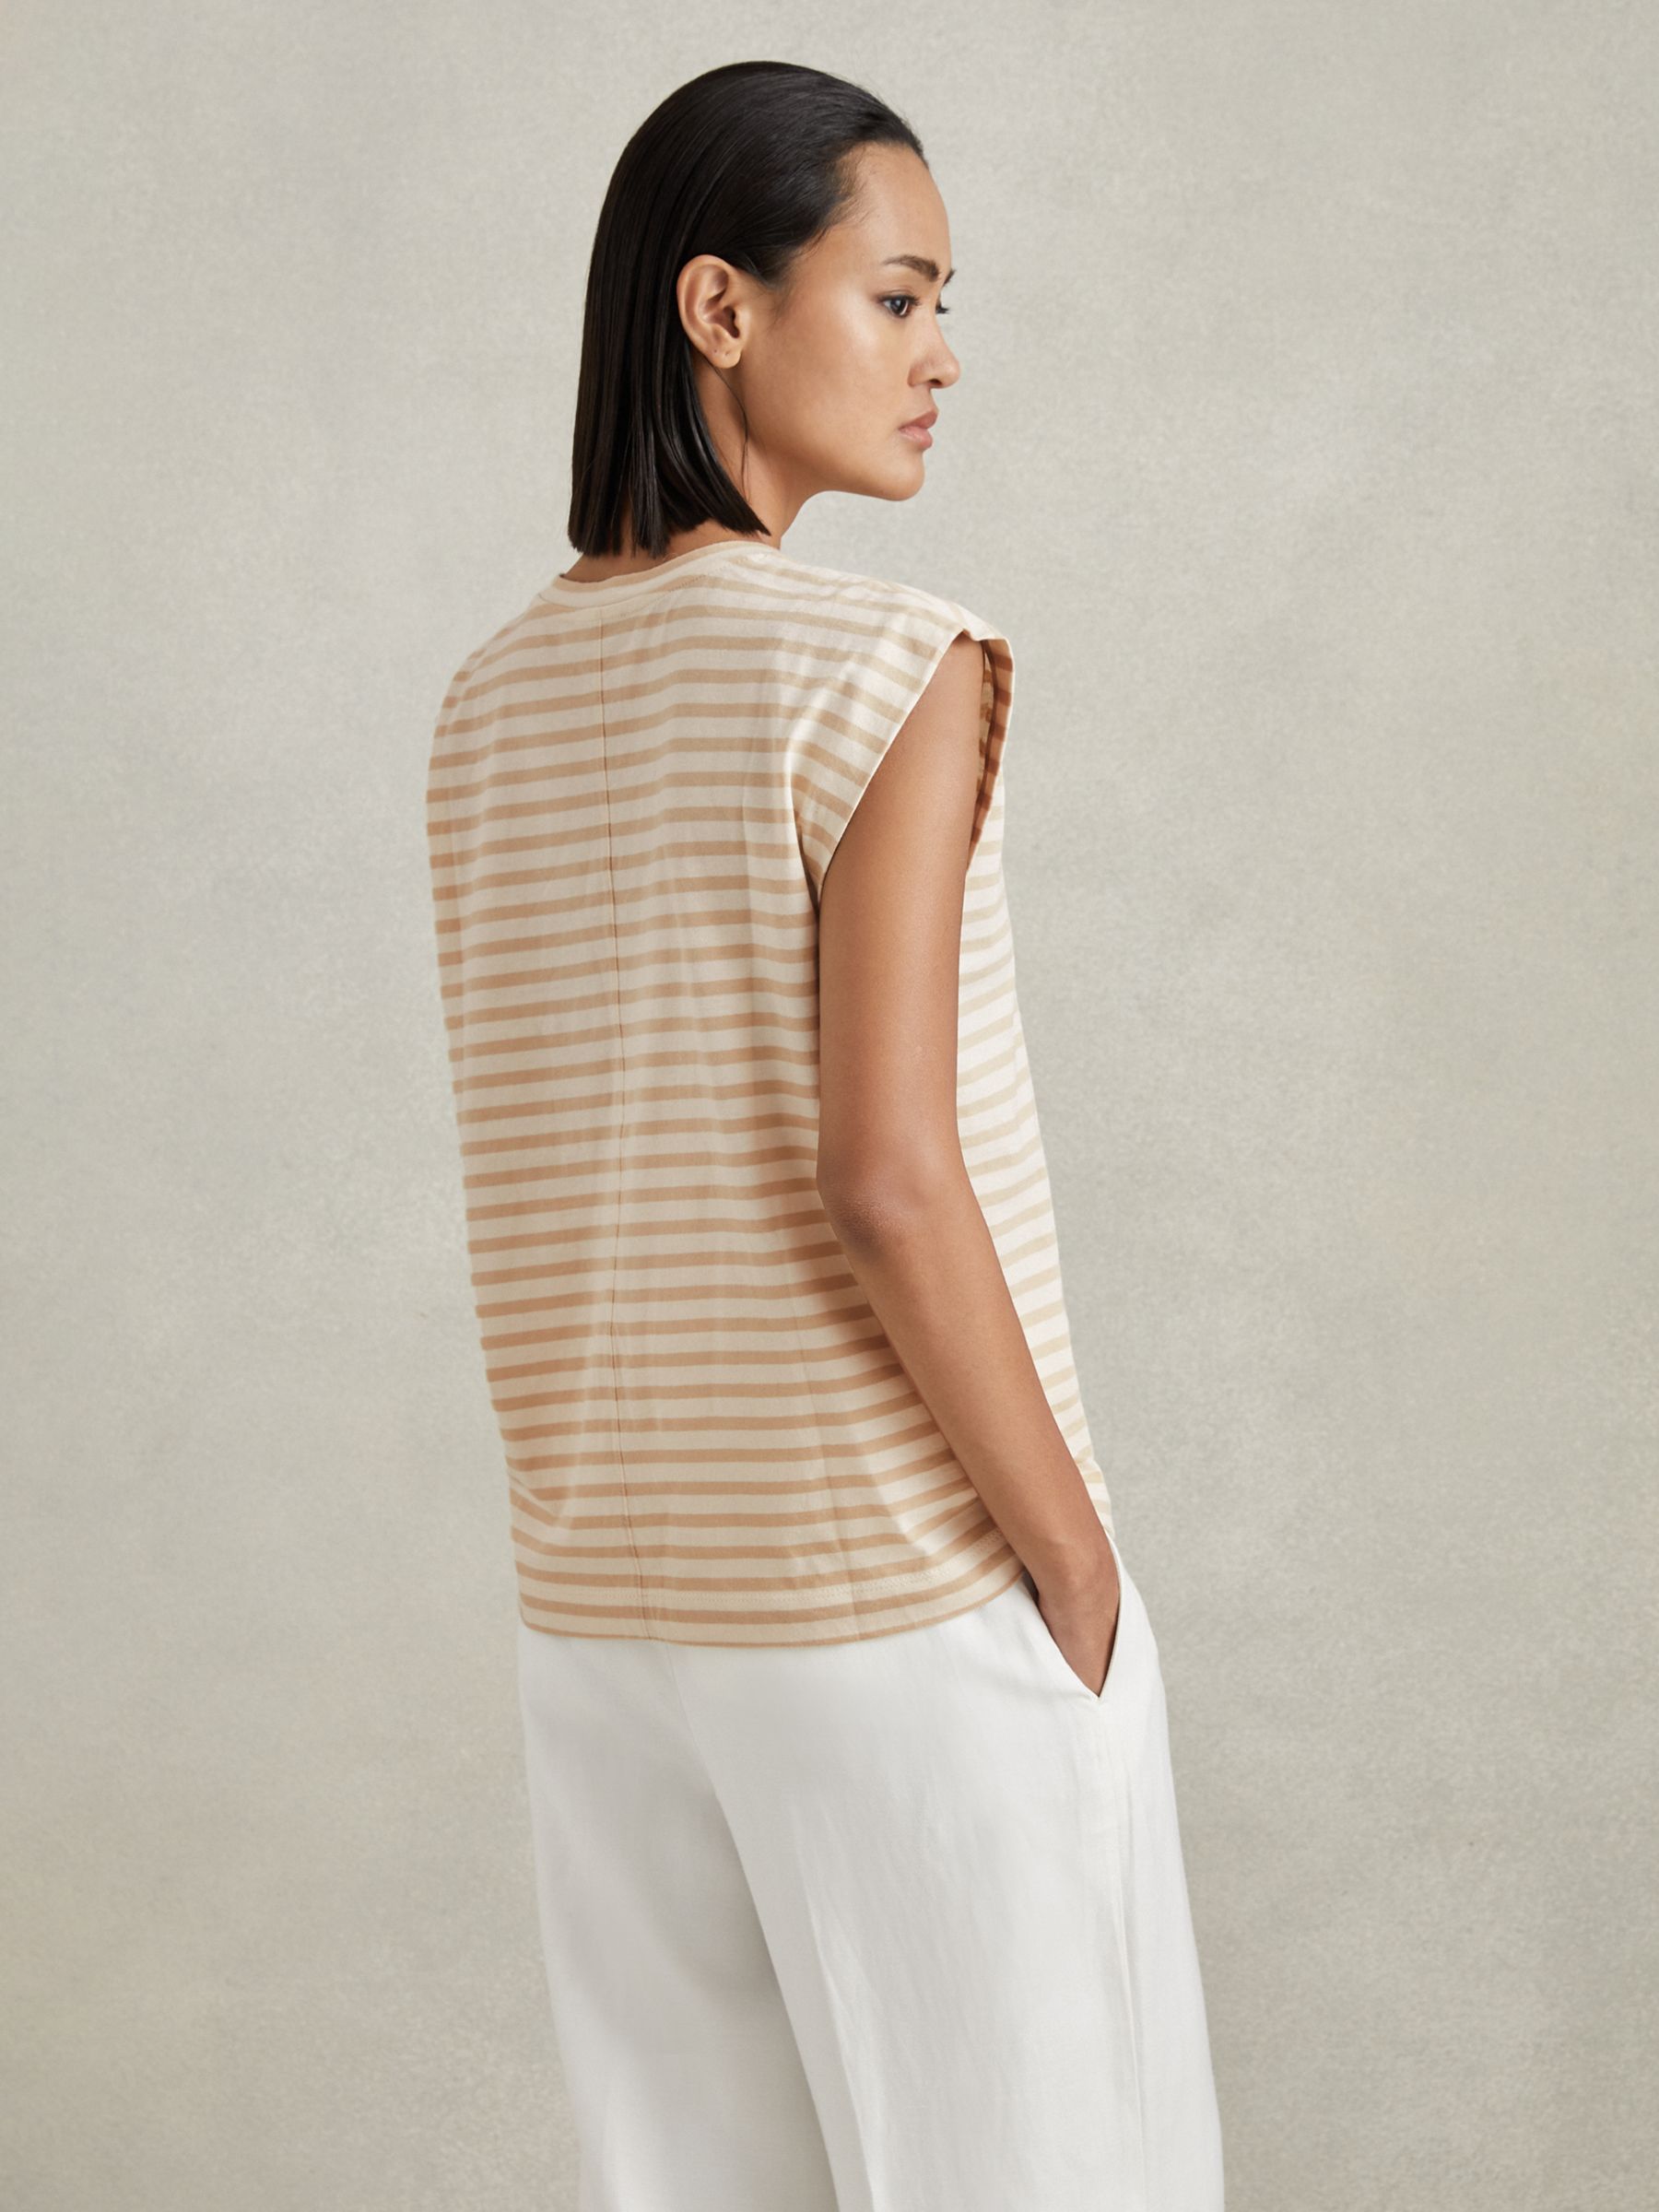 Reiss Morgan Striped Cap Sleeve T-Shirt, Neutral/White, XS